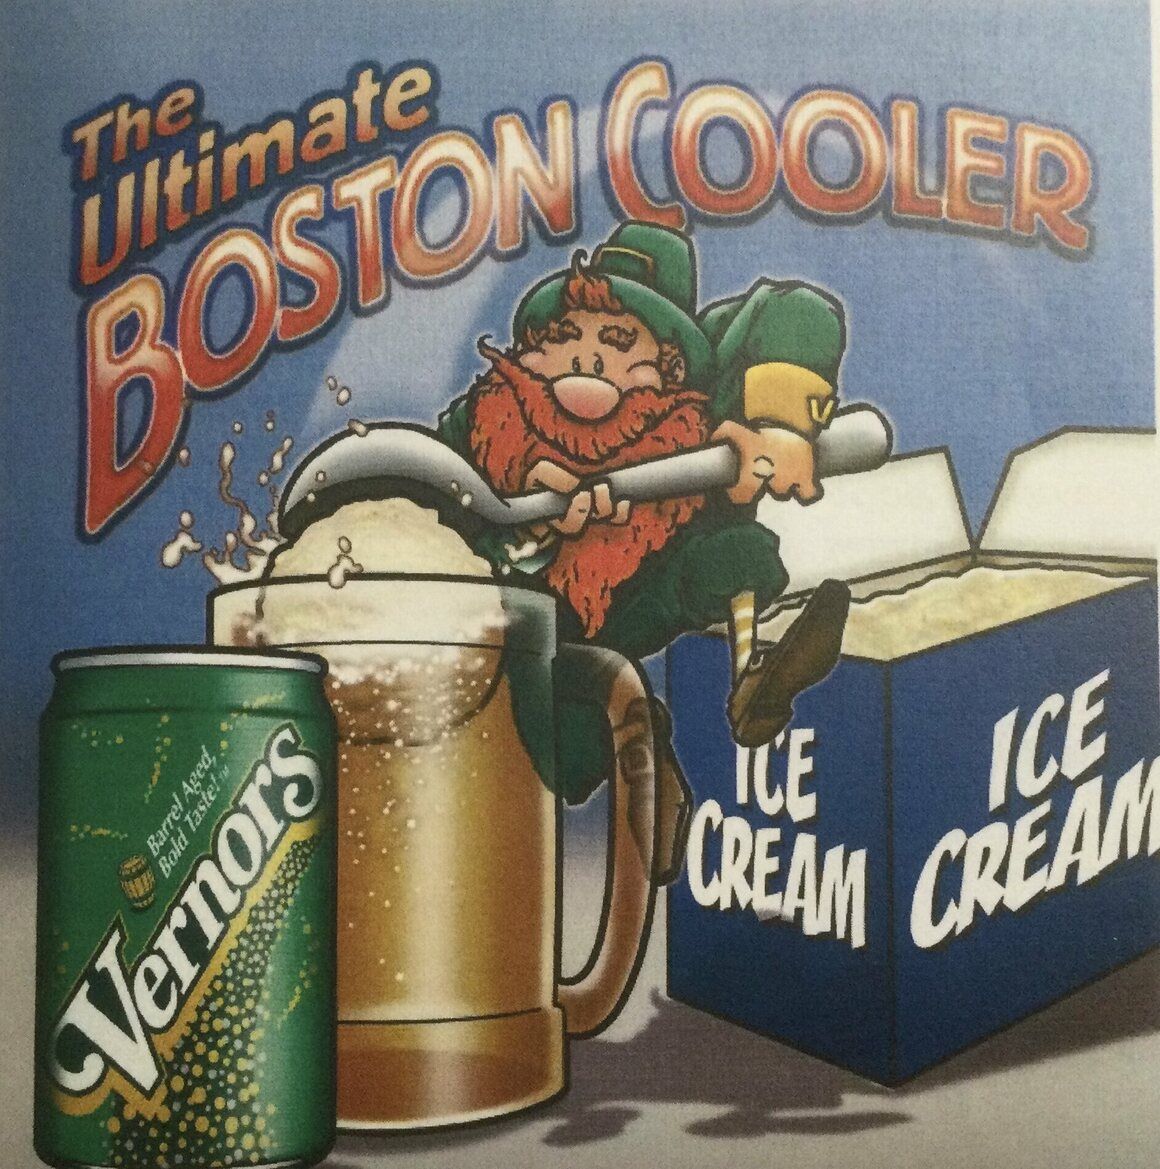 Vernors' gnome mascot makes a Boston Cooler.